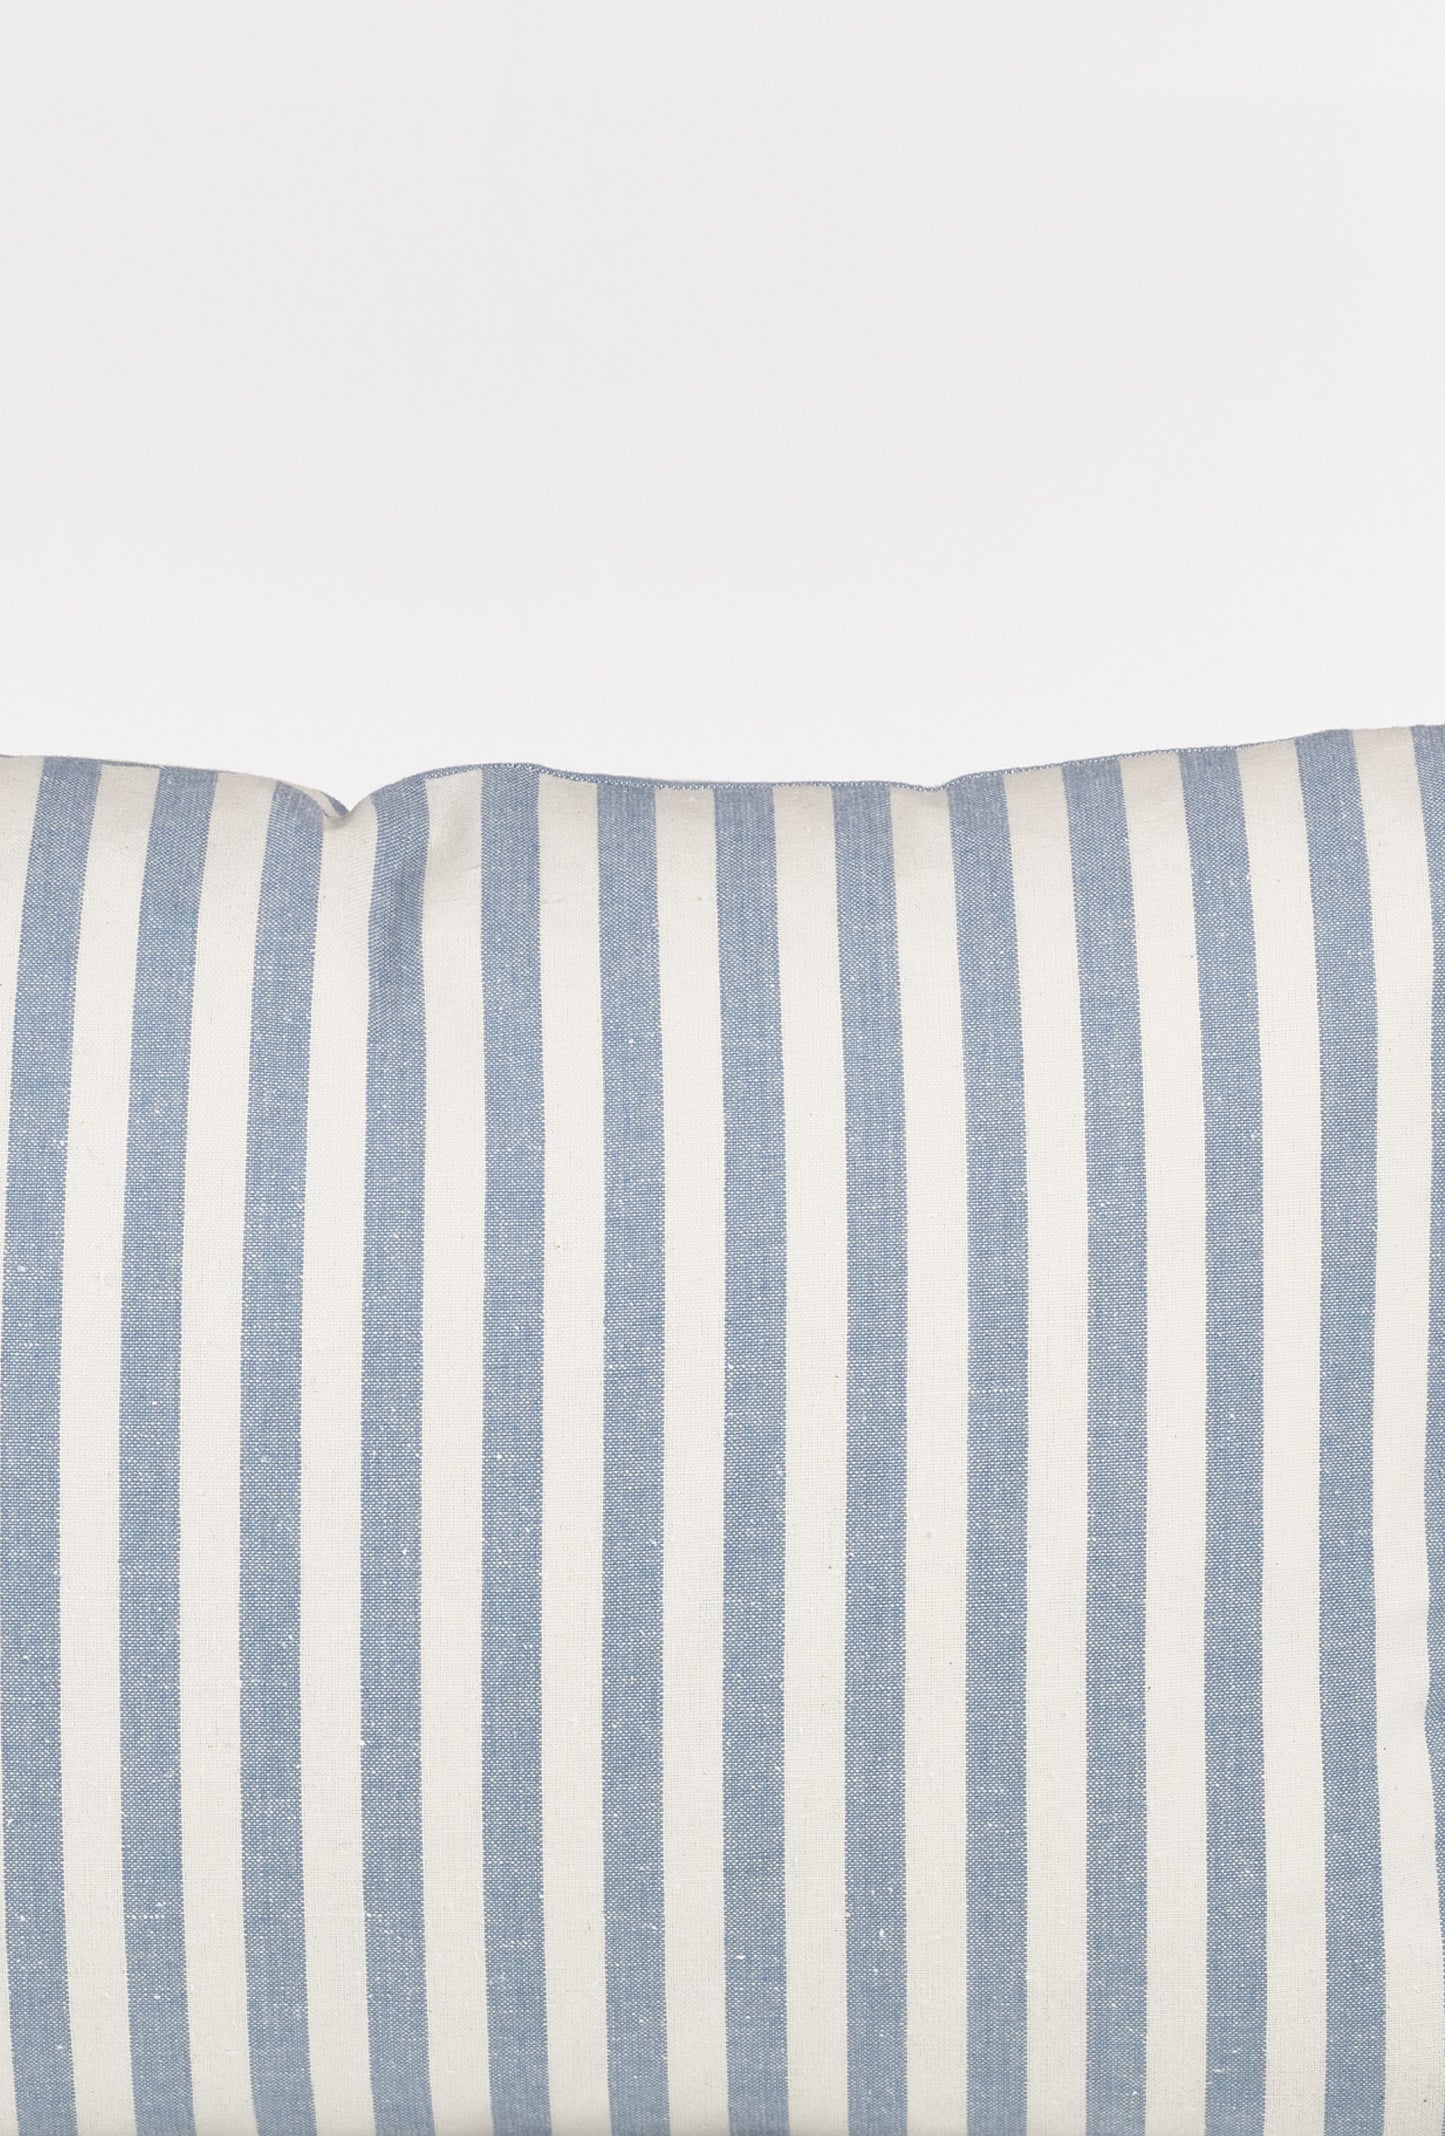 SOFIE Decorative cushion (60x40)